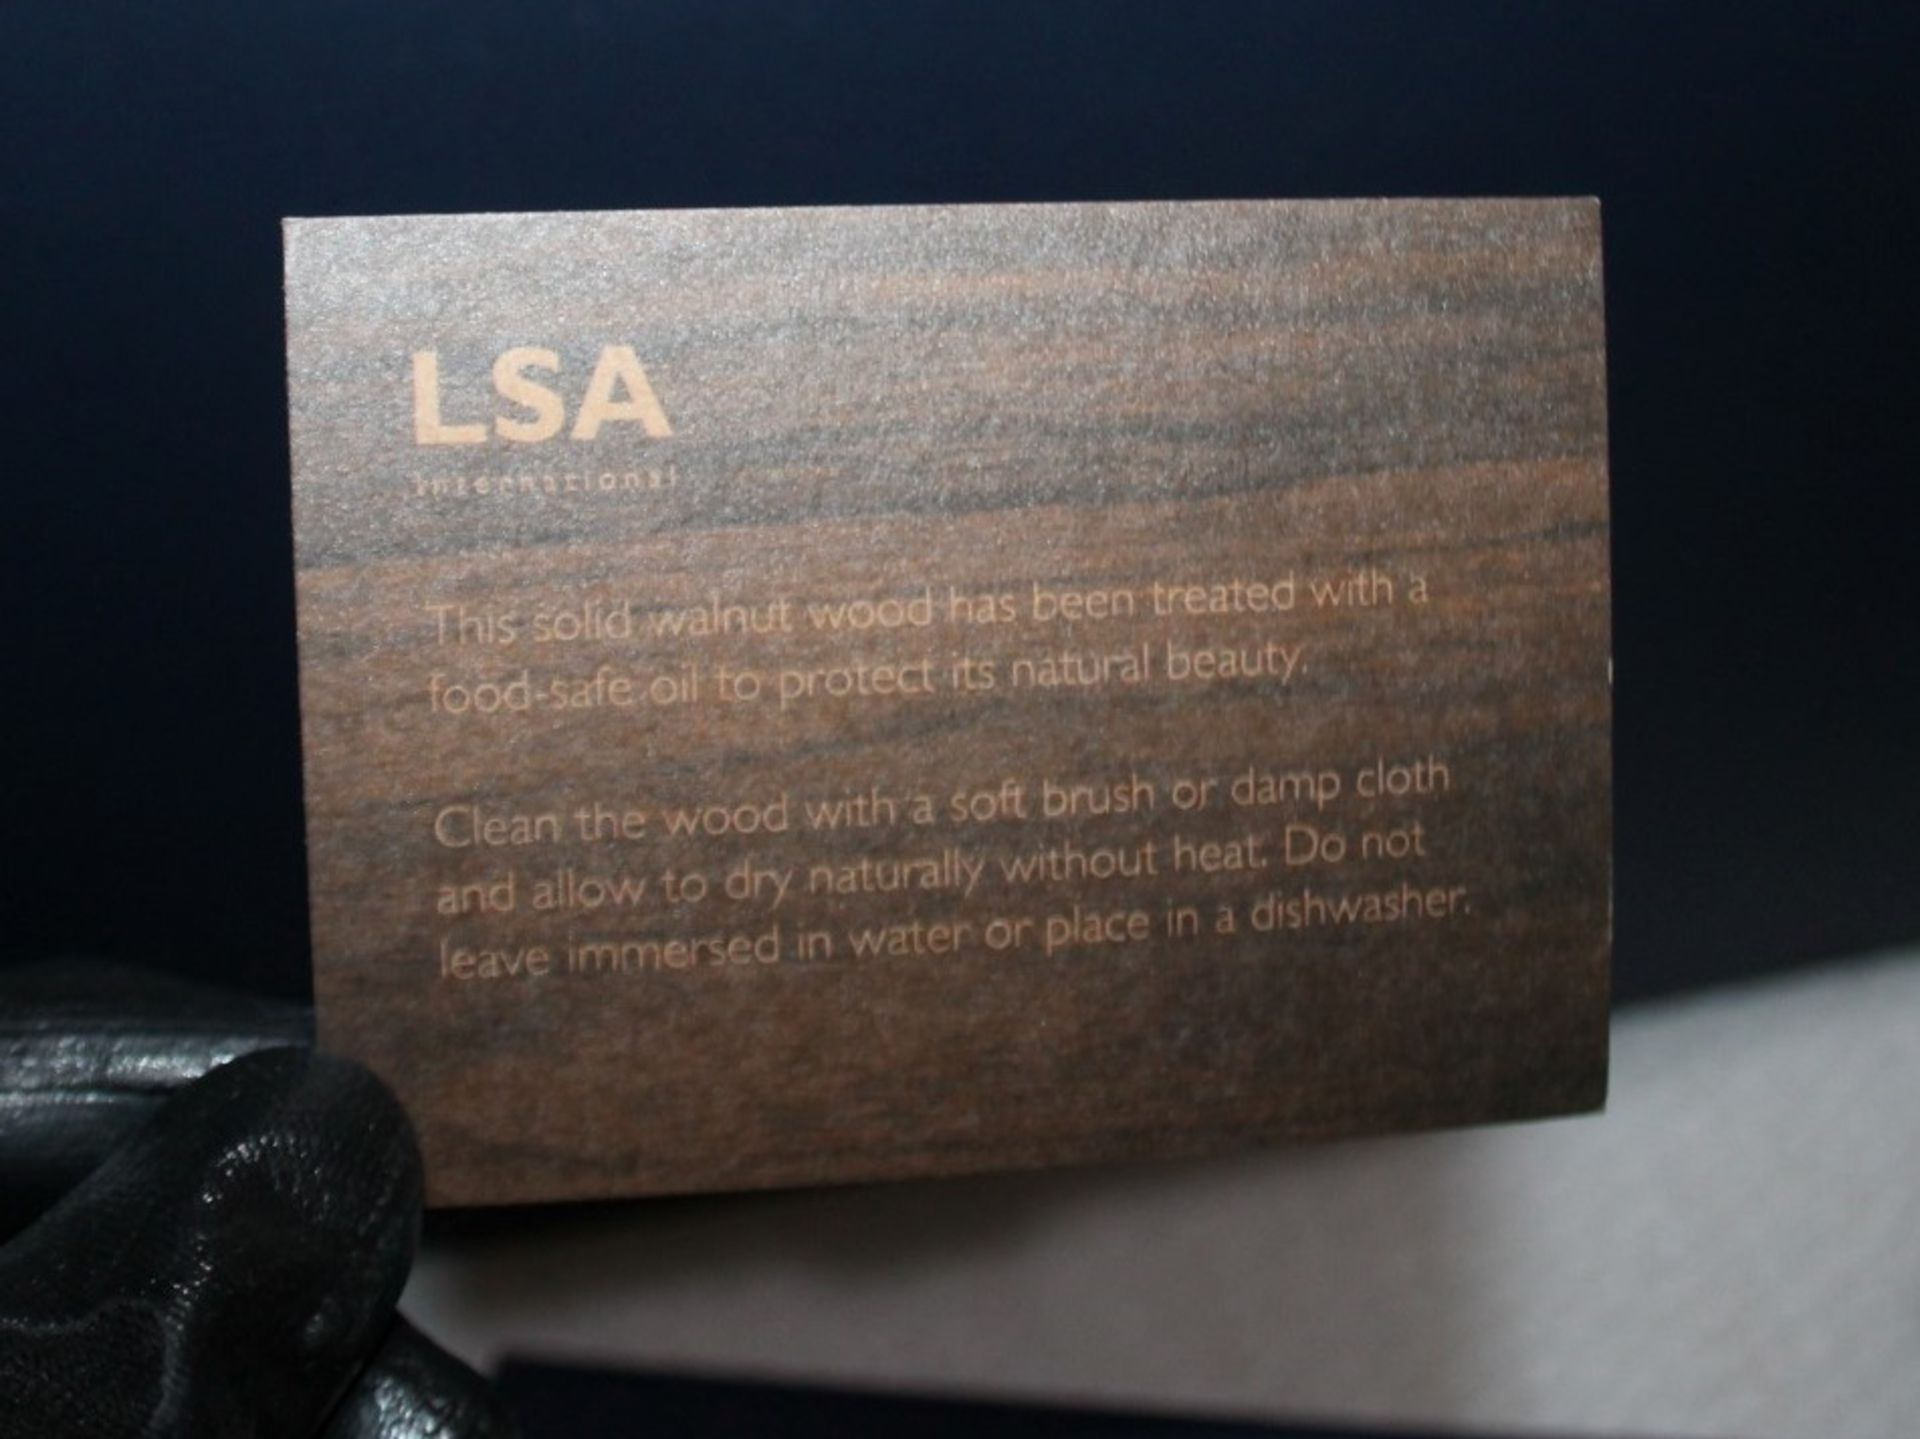 1 x LSA INTERNATIONAL 'Islay' Whisky Connoisseur Set - Original Price £325.00 - Unused Boxed Stock - Image 13 of 16